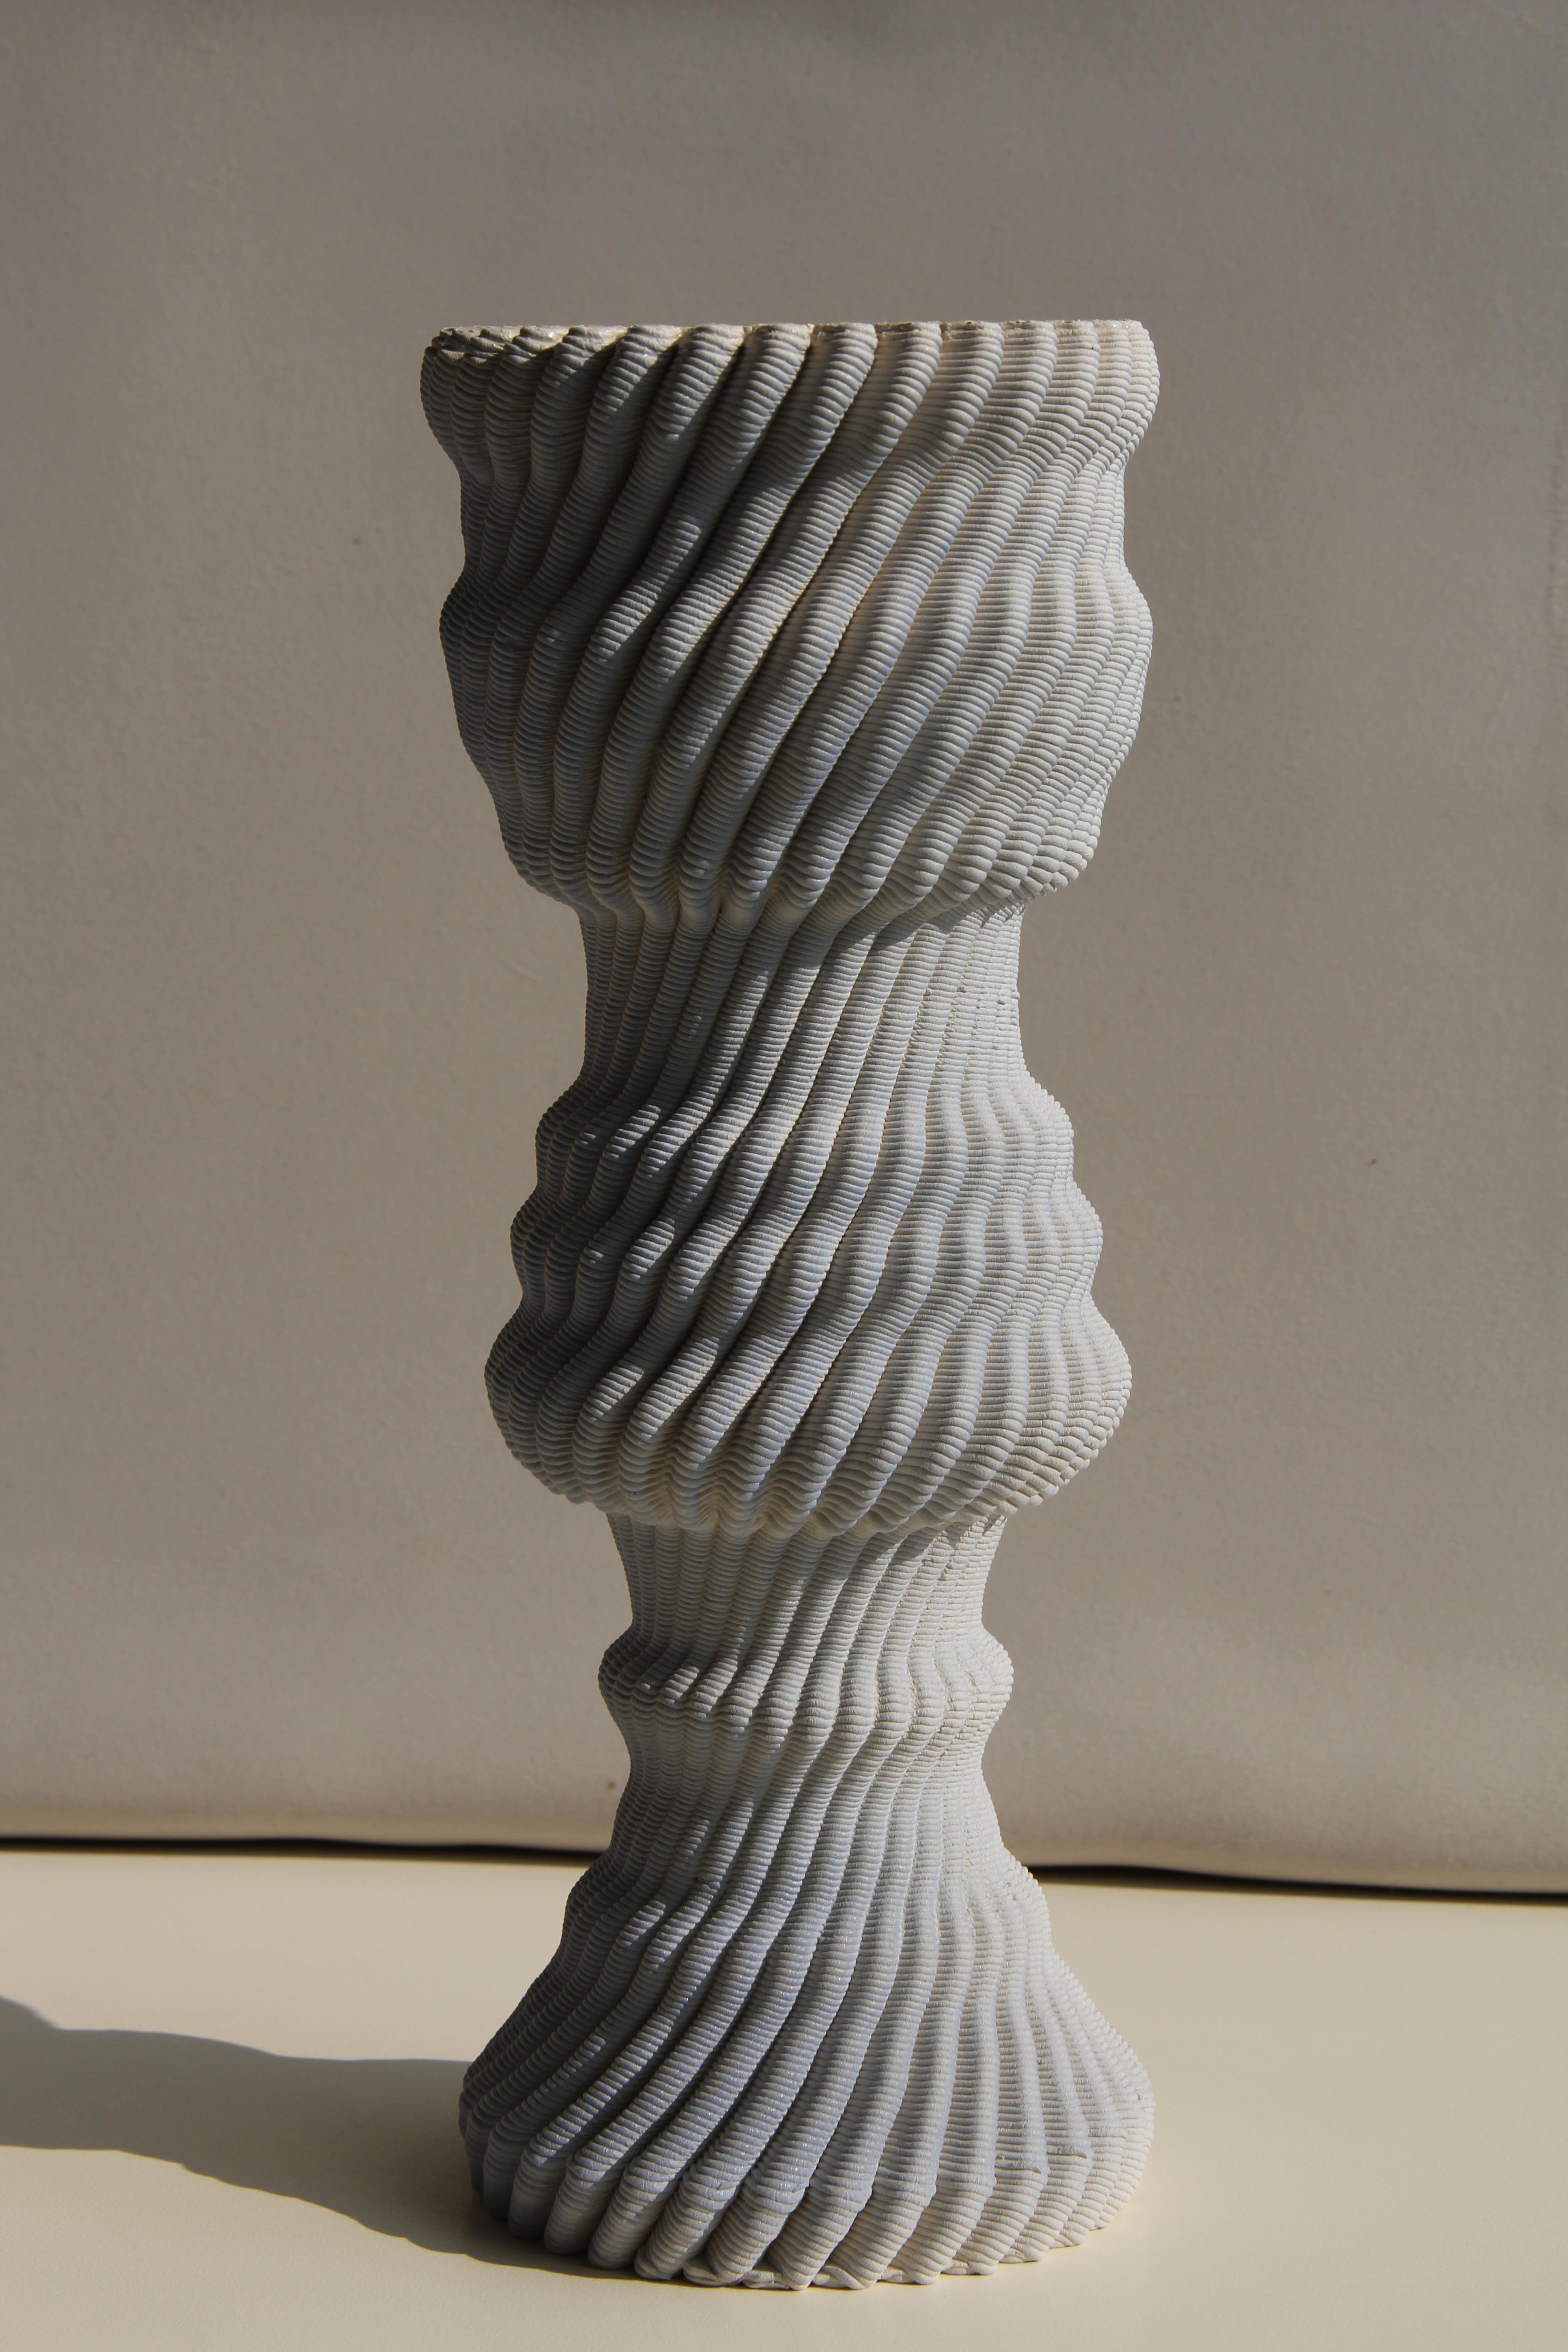 Italian Gradient Blue 3D Printed Ceramic Tecla Vase Italy Contemporary 21st Century For Sale